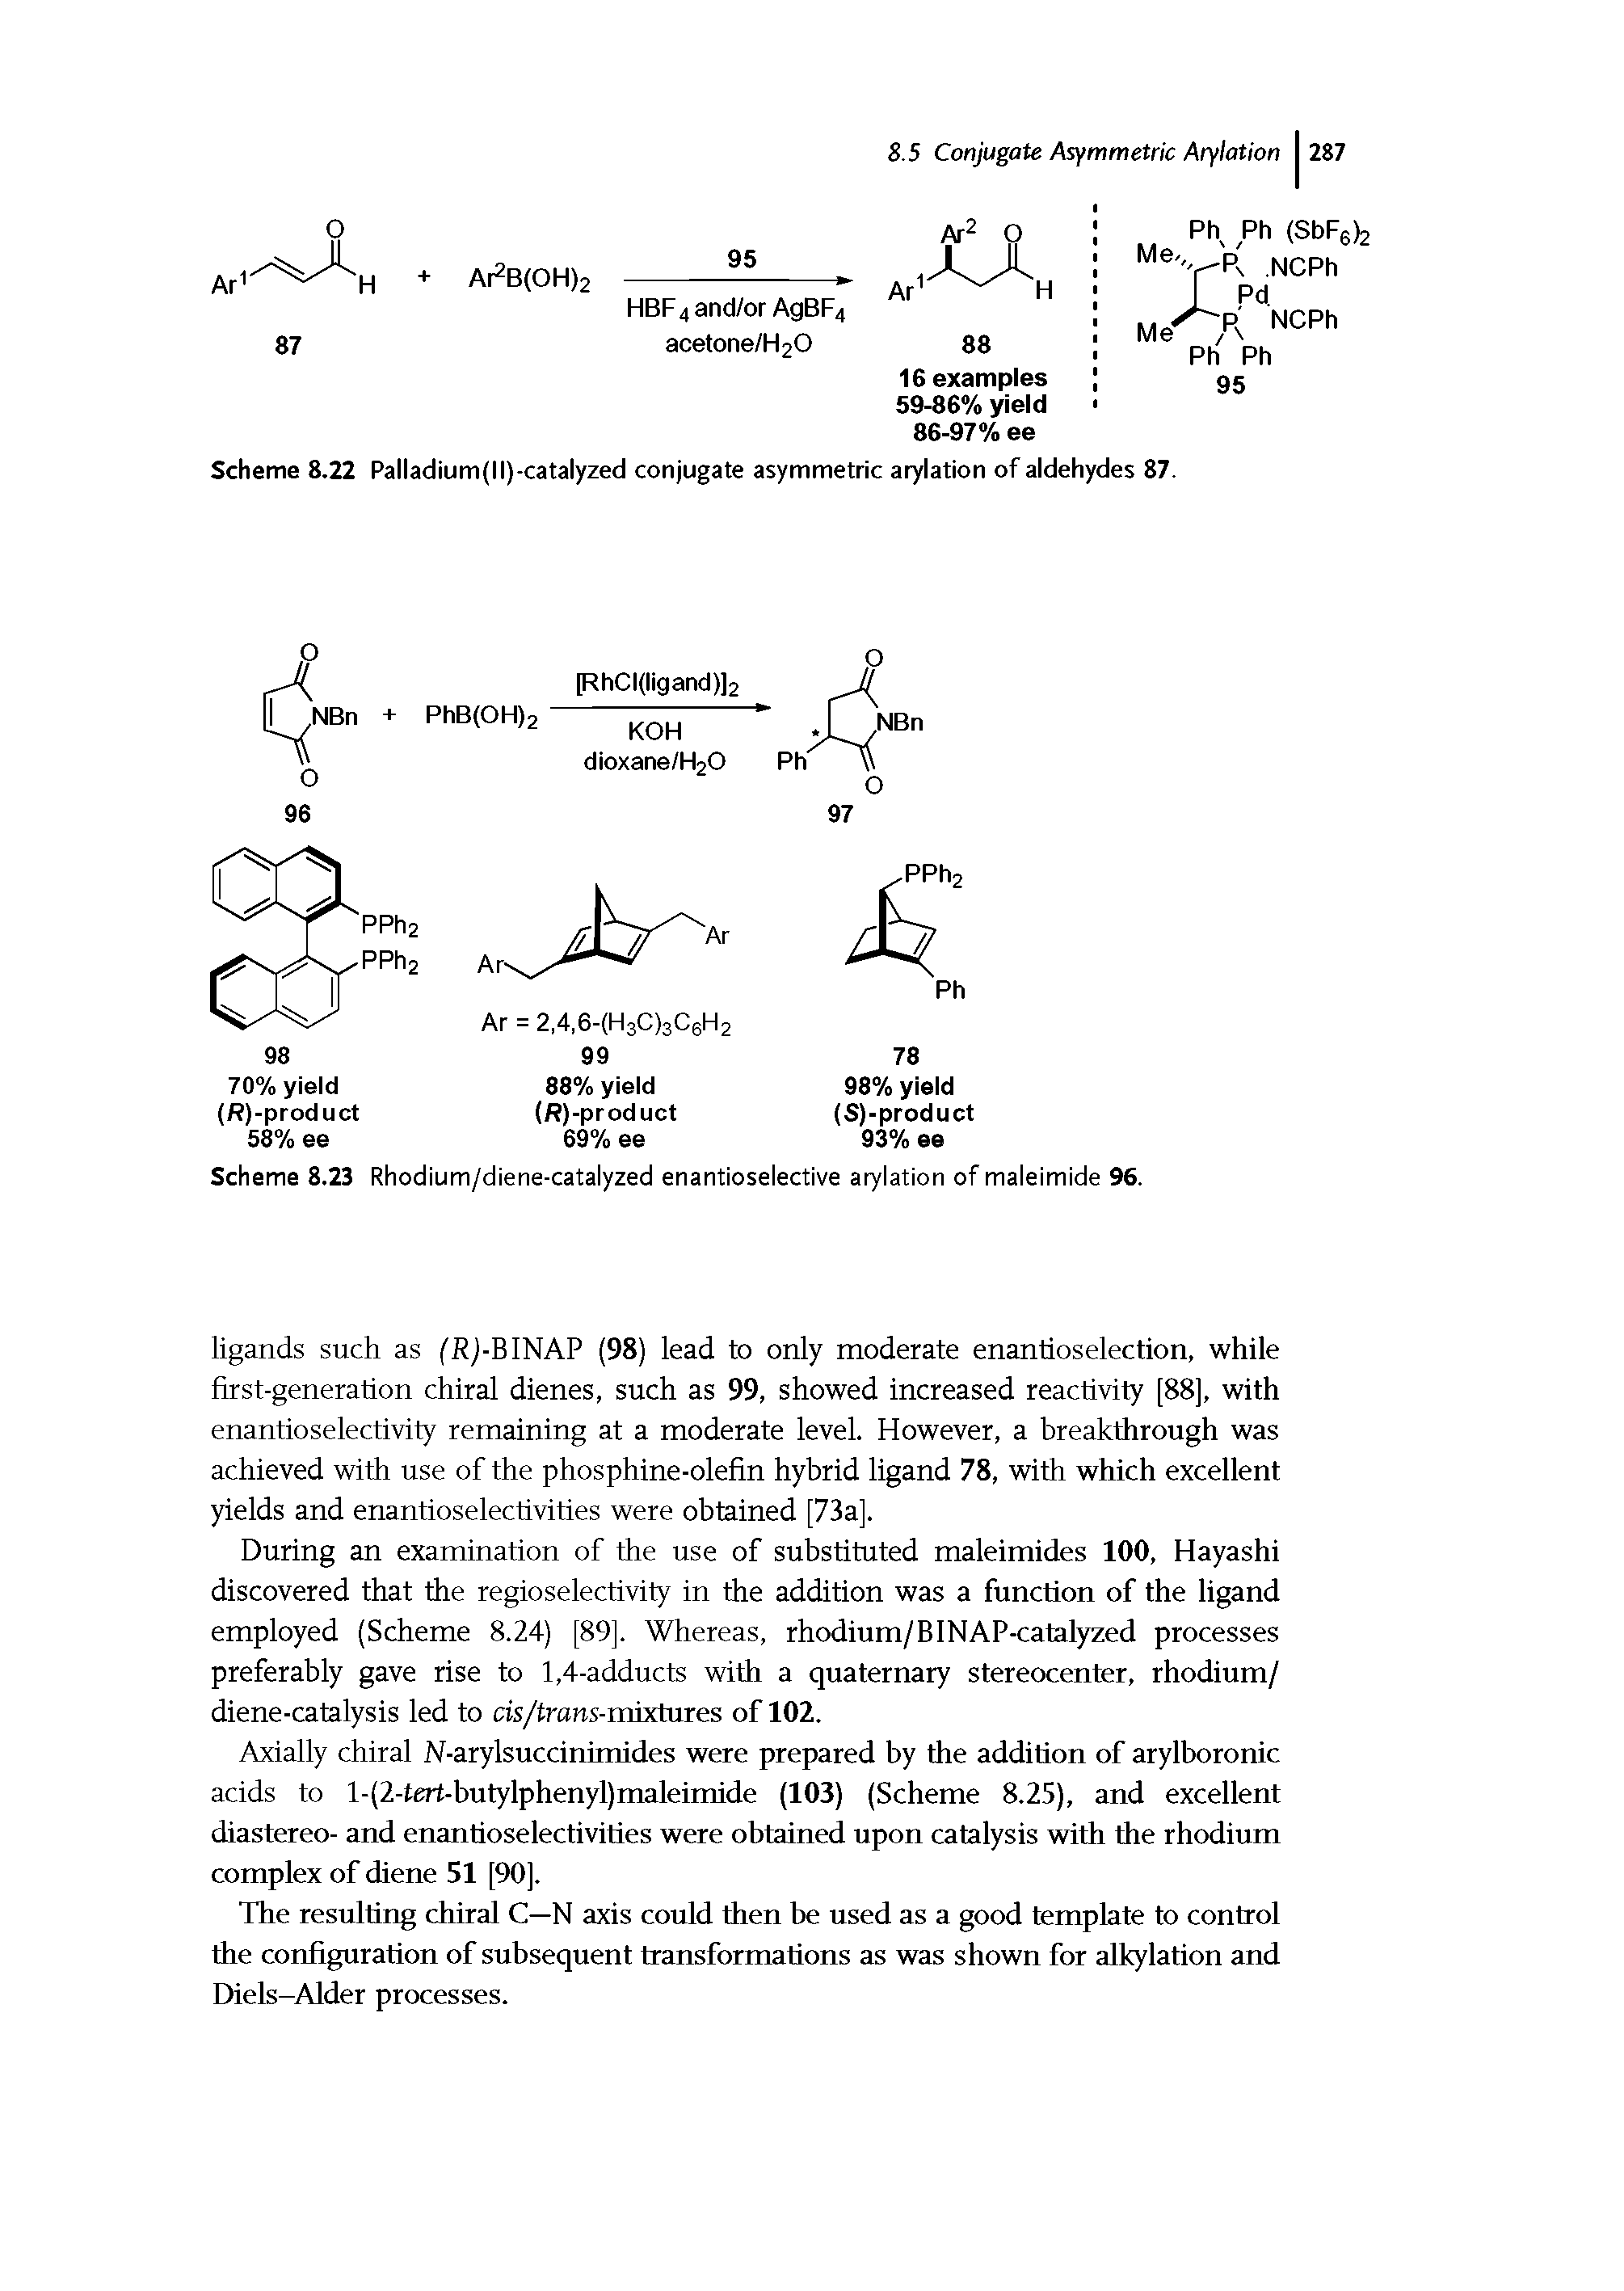 Scheme 8.23 Rhodium/diene-catalyzed enantioselective arylation of maleimide 96.